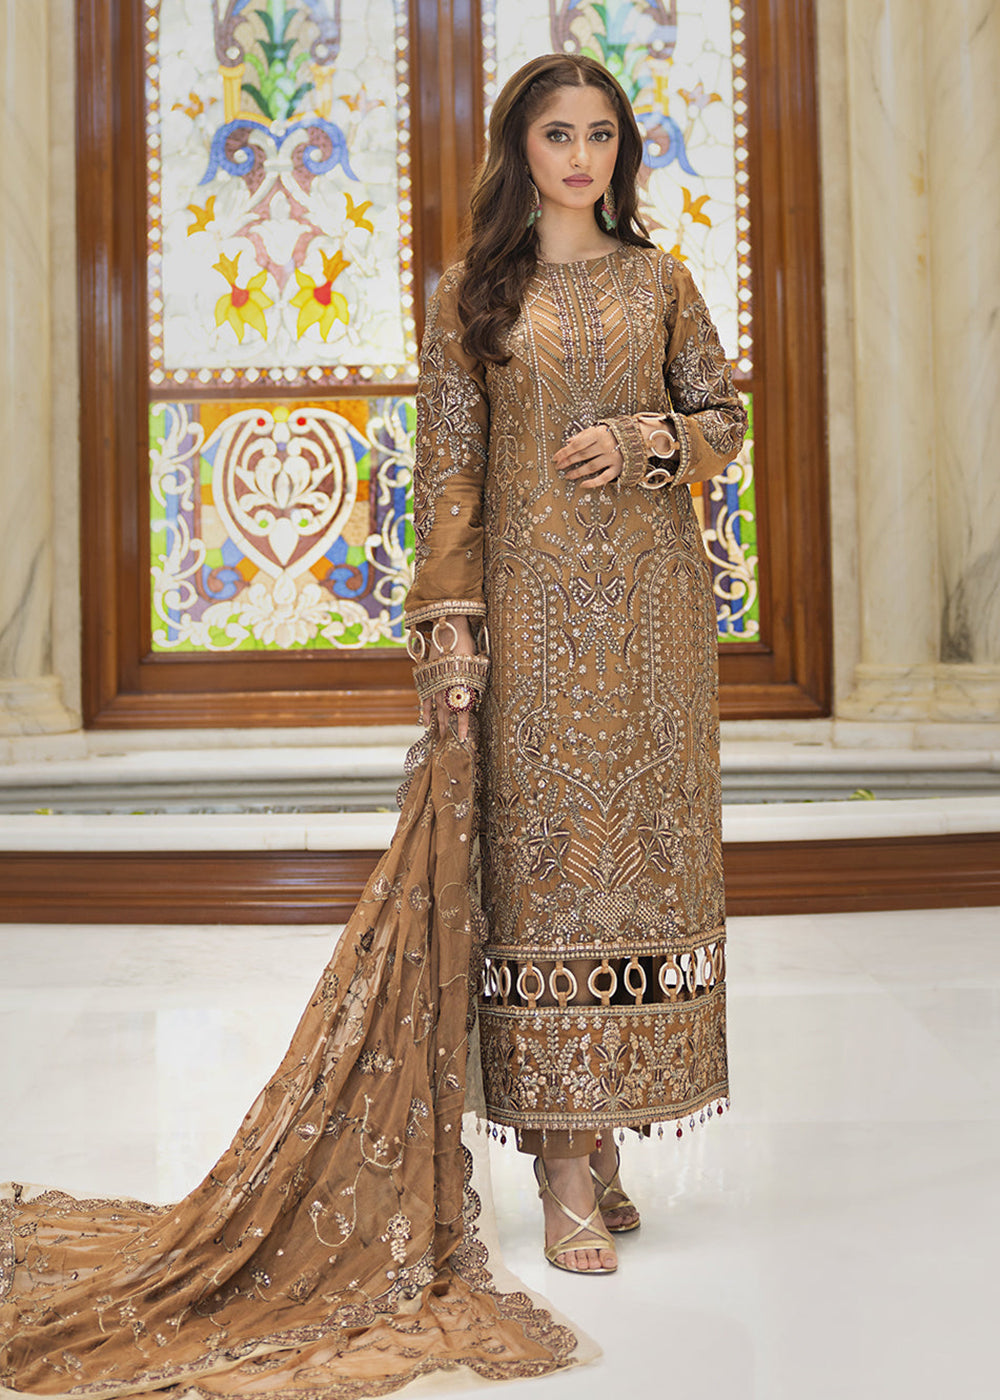 Buy Now Ishq Aatish Luxury Chiffon '23 by Emaan Adeel | HANA Online in USA, UK, Canada & Worldwide at Empress Clothing. 